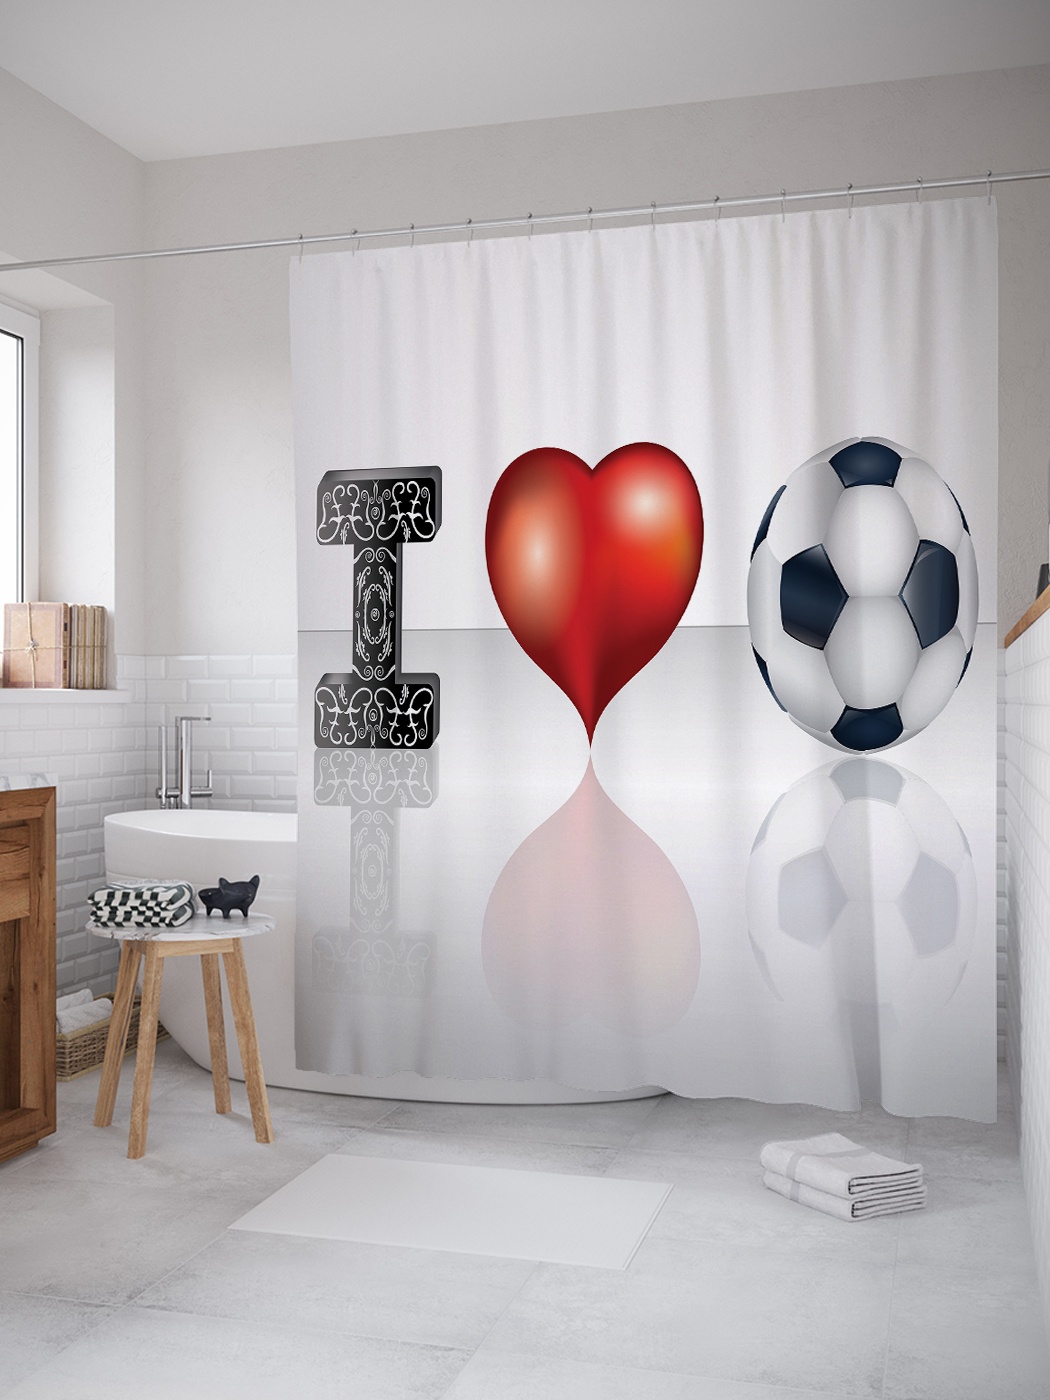 фото Штора (занавеска) для ванной «я люблю футбол» из ткани, 180х200 см с крючками joyarty